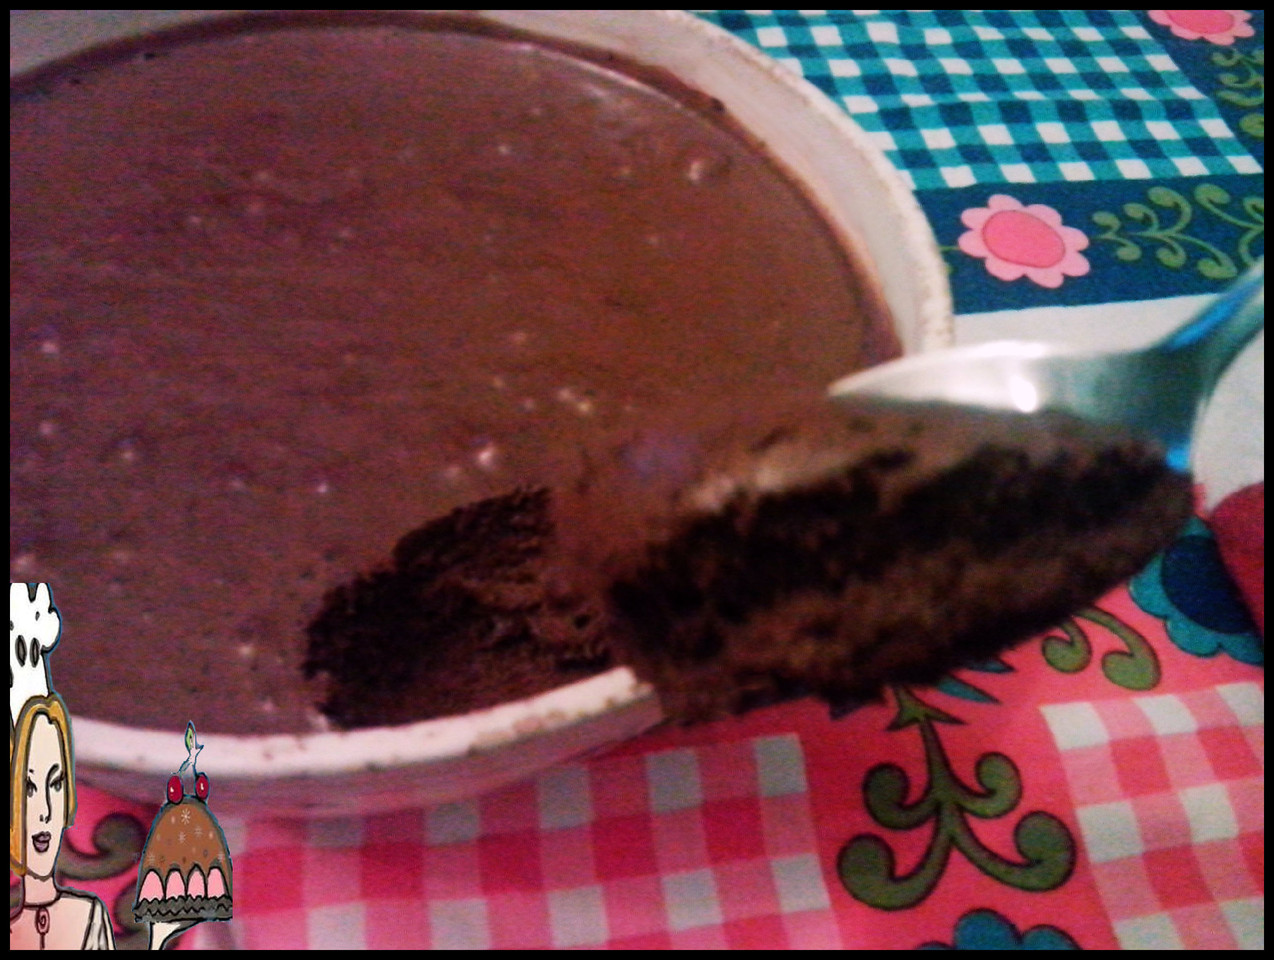 Mousse de chocolate insolente ♥♥♥